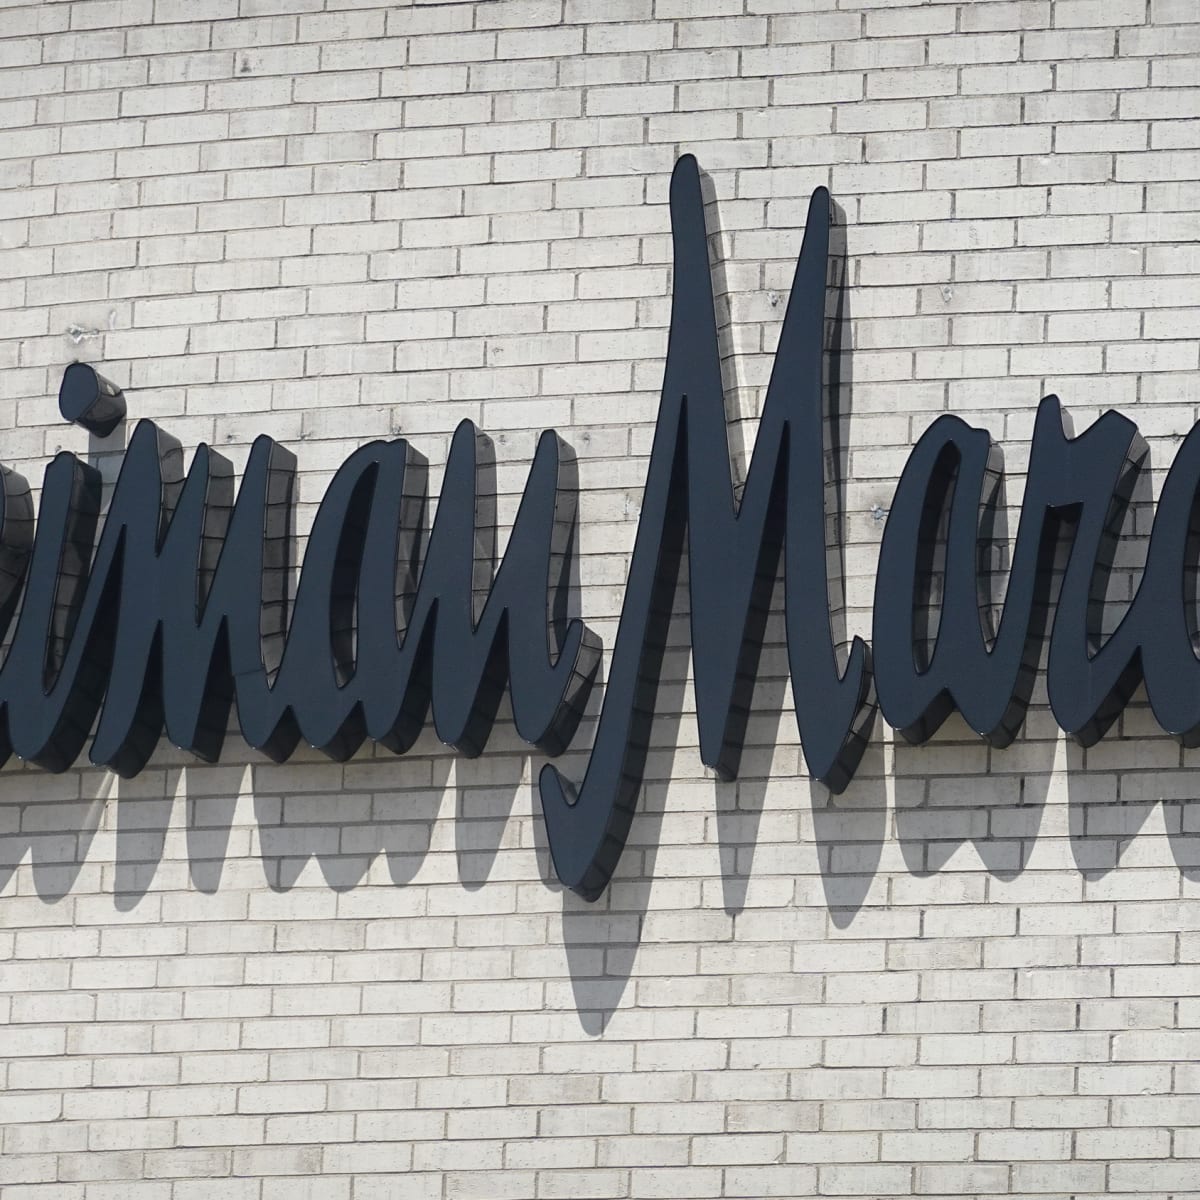 Neiman Marcus Partnership